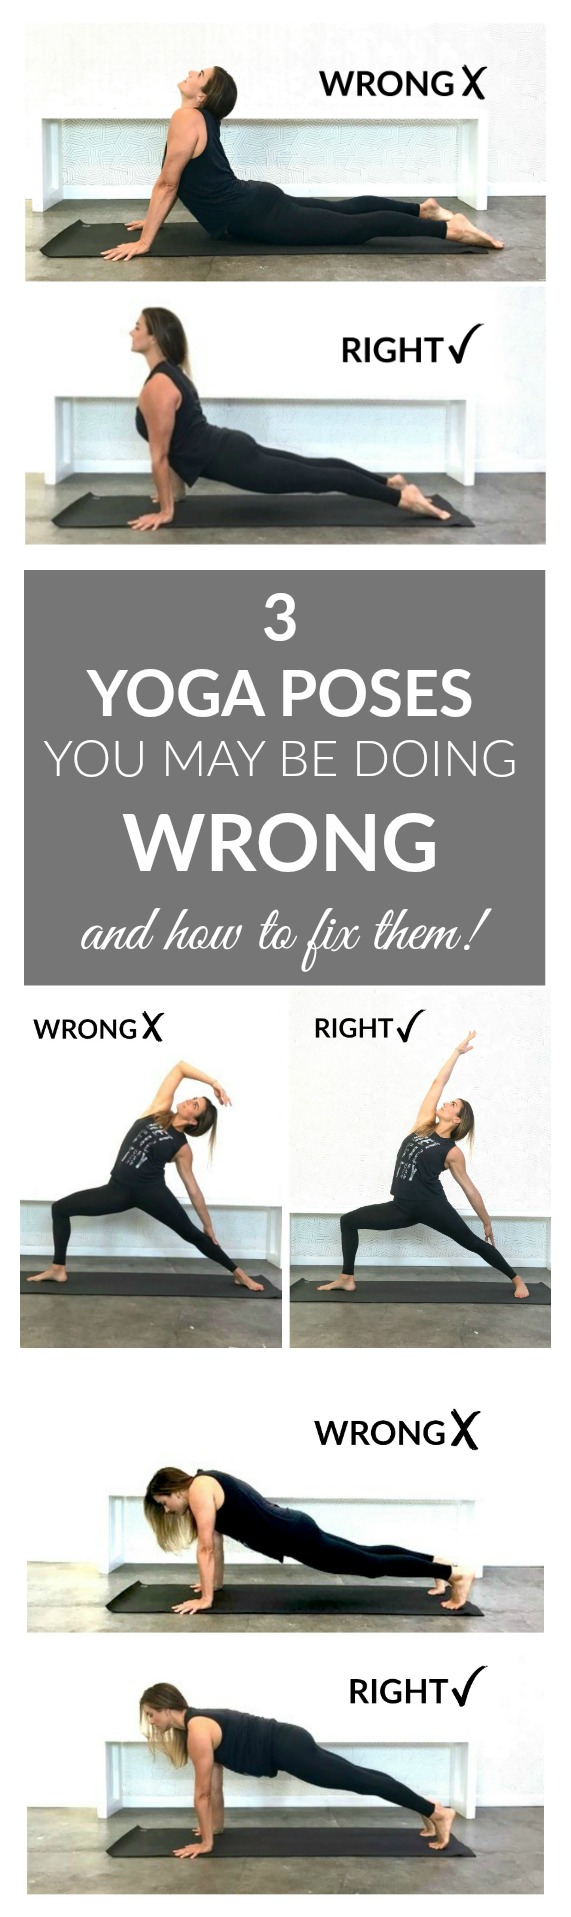 Yoga Poses Proper Form